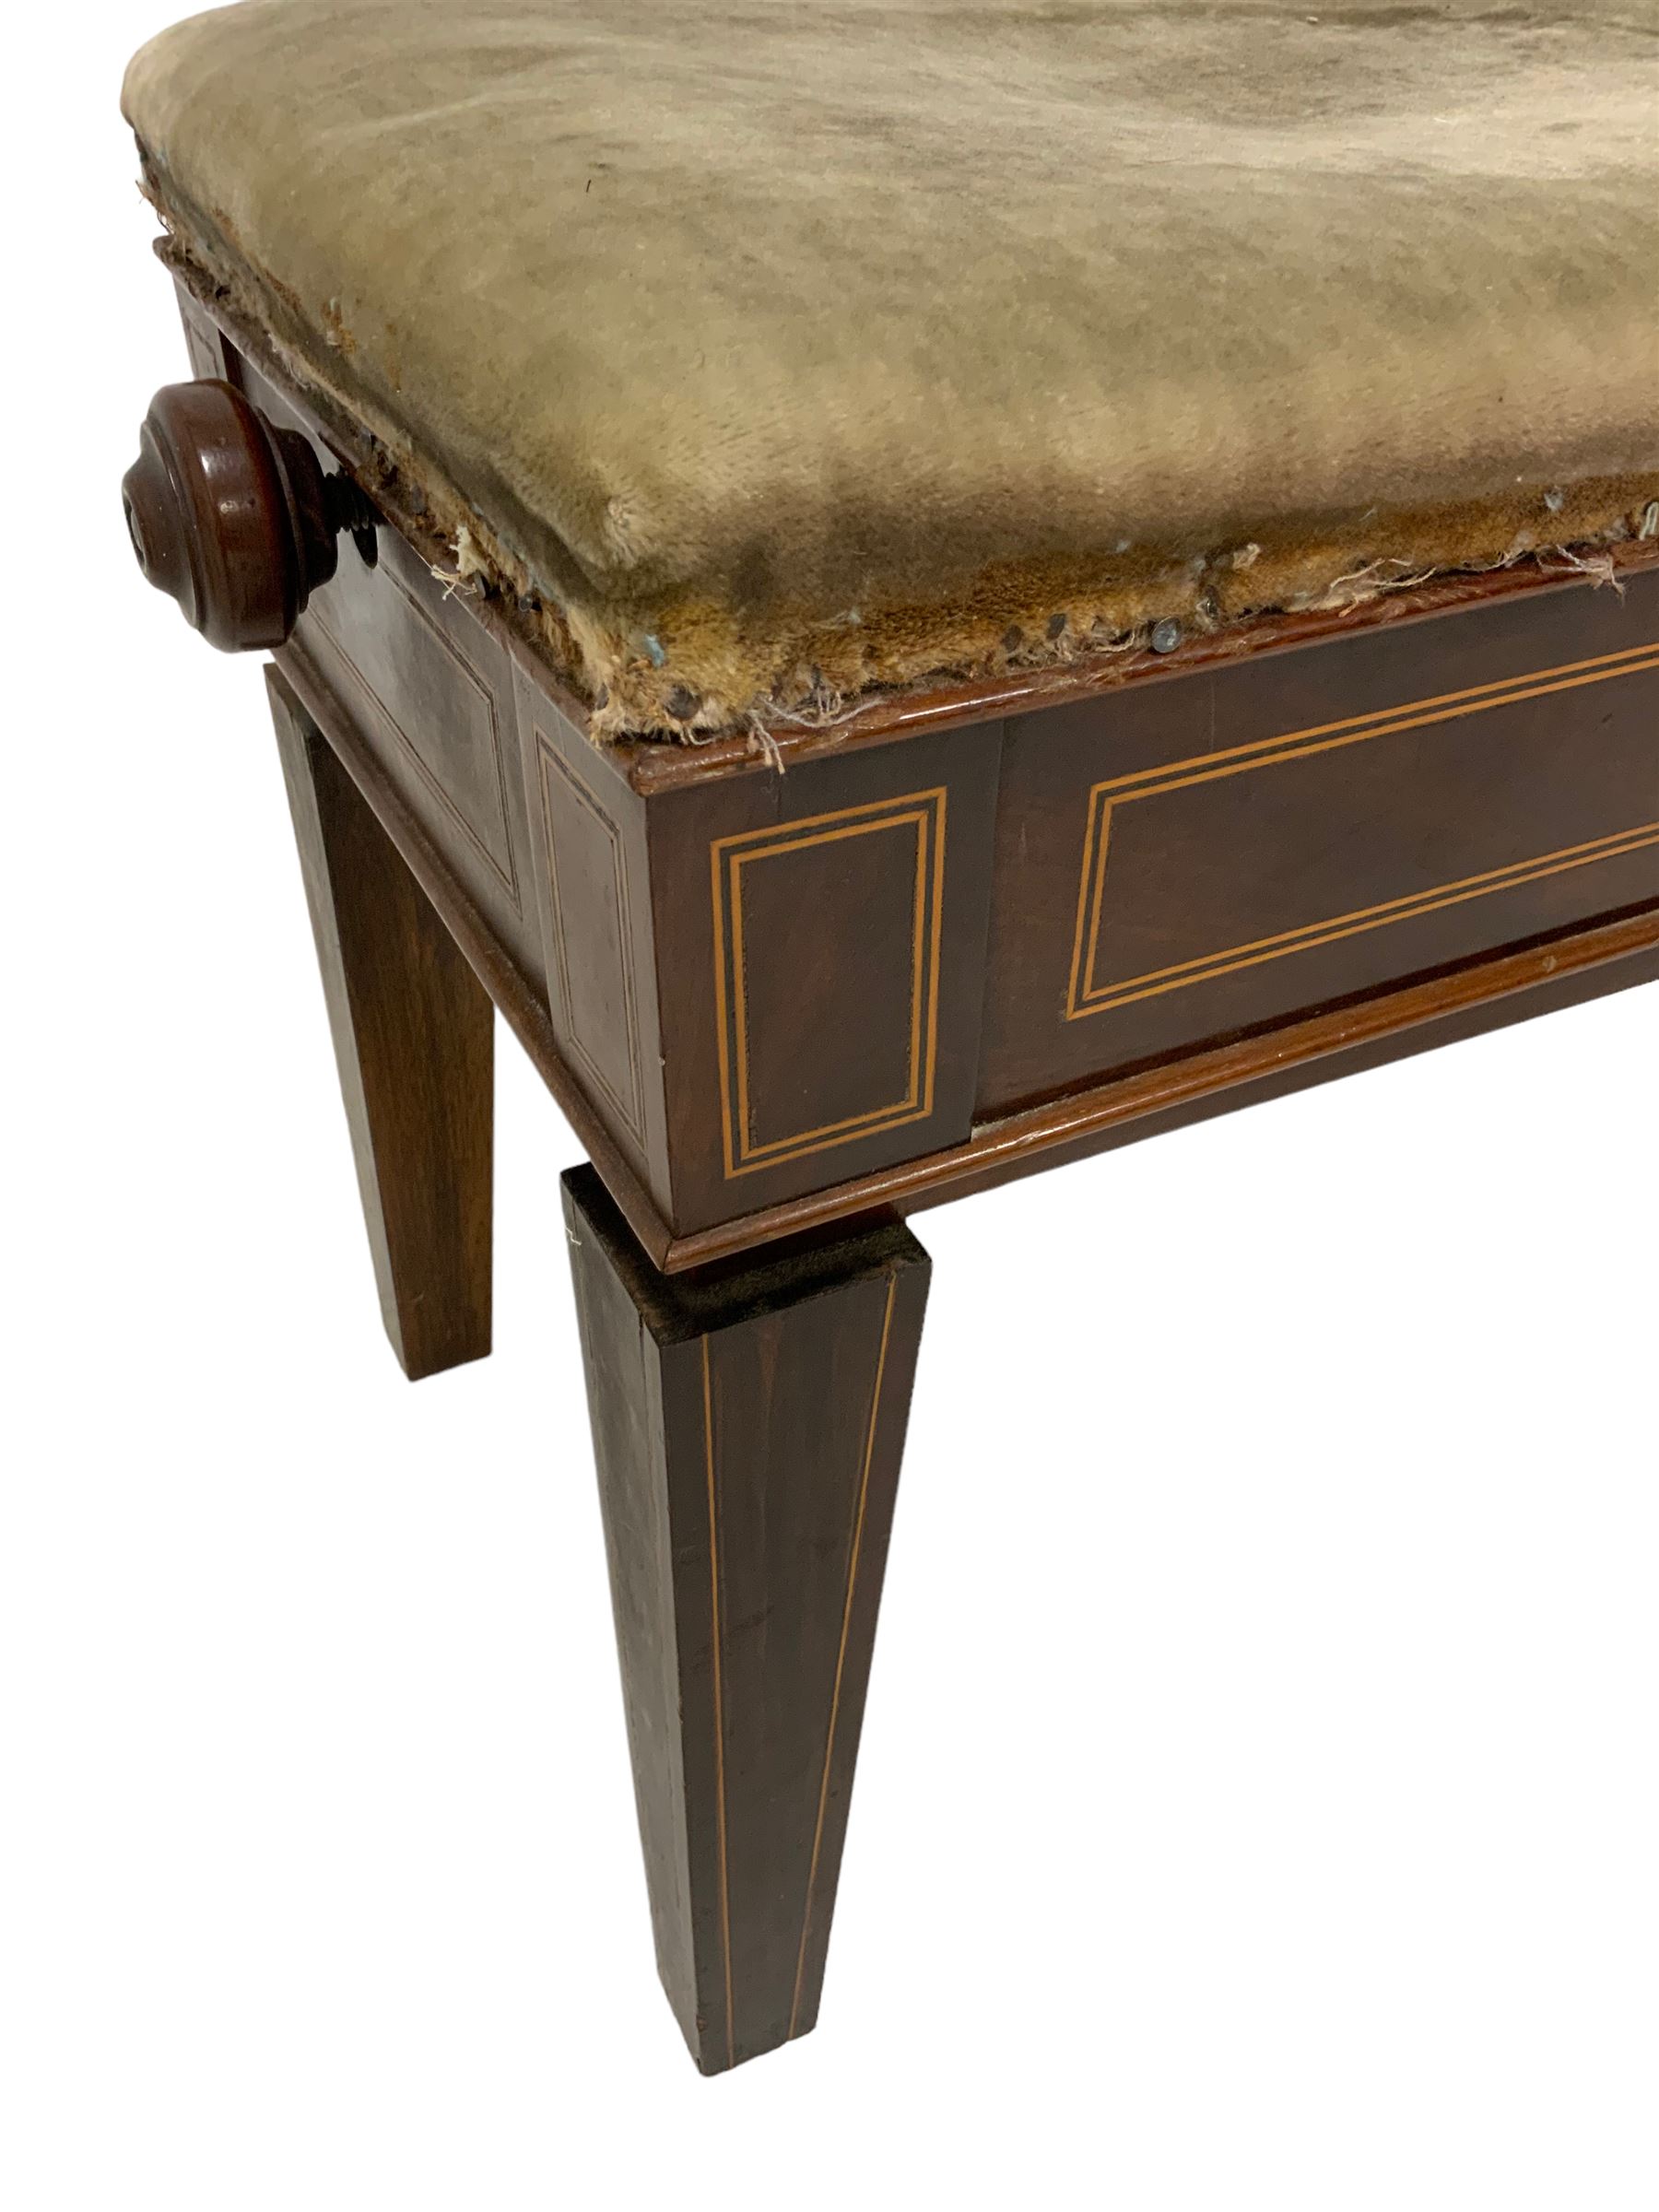 Edwardian inlaid mahogany rise and fall piano stool - Image 2 of 4